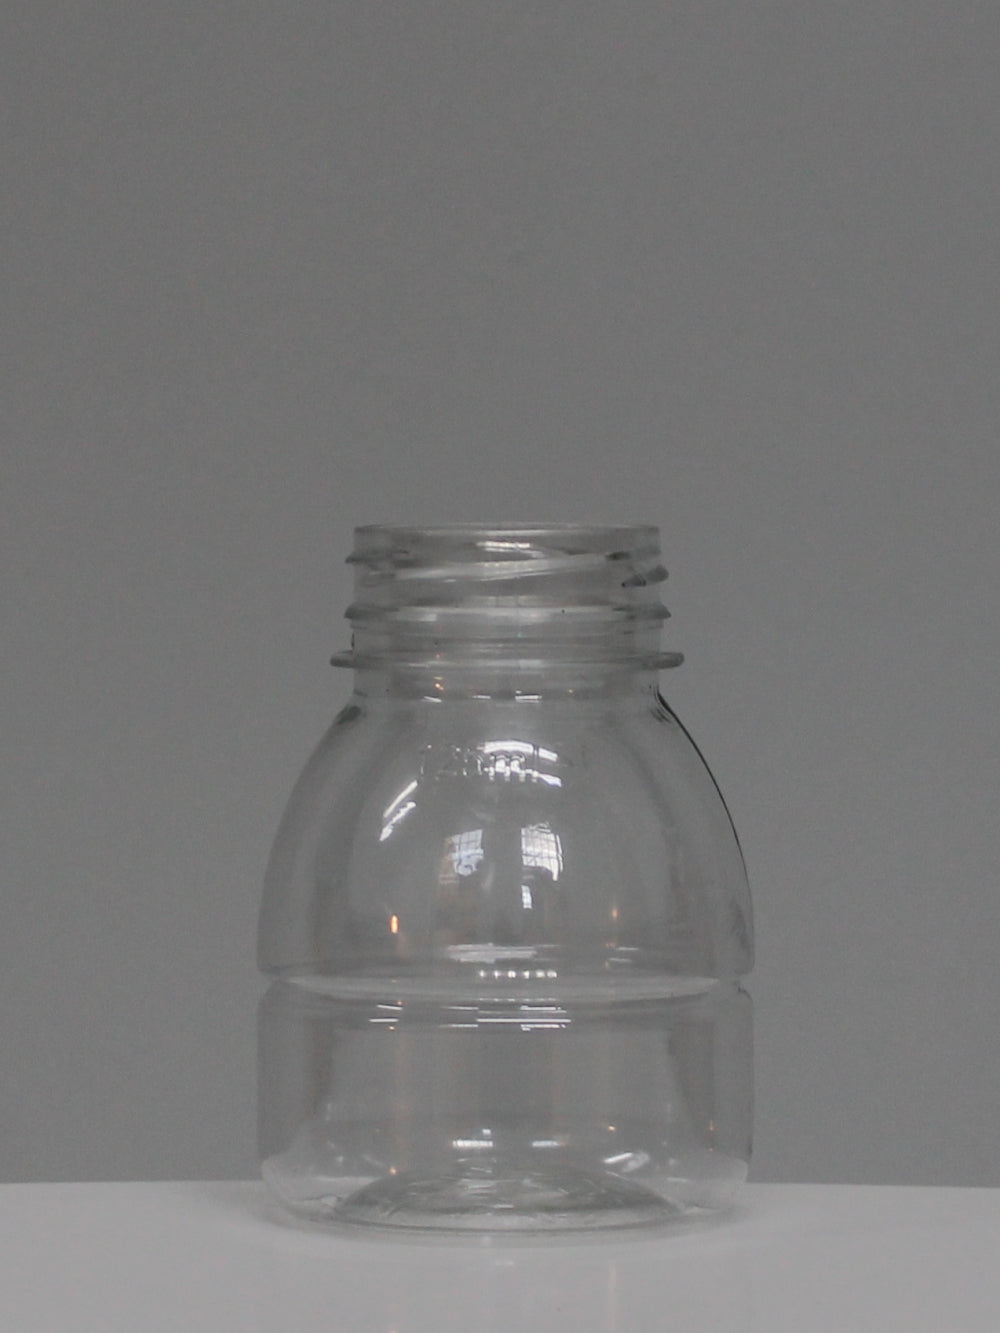 125ml Short Juice PET Bottle - (Box of 100 units)